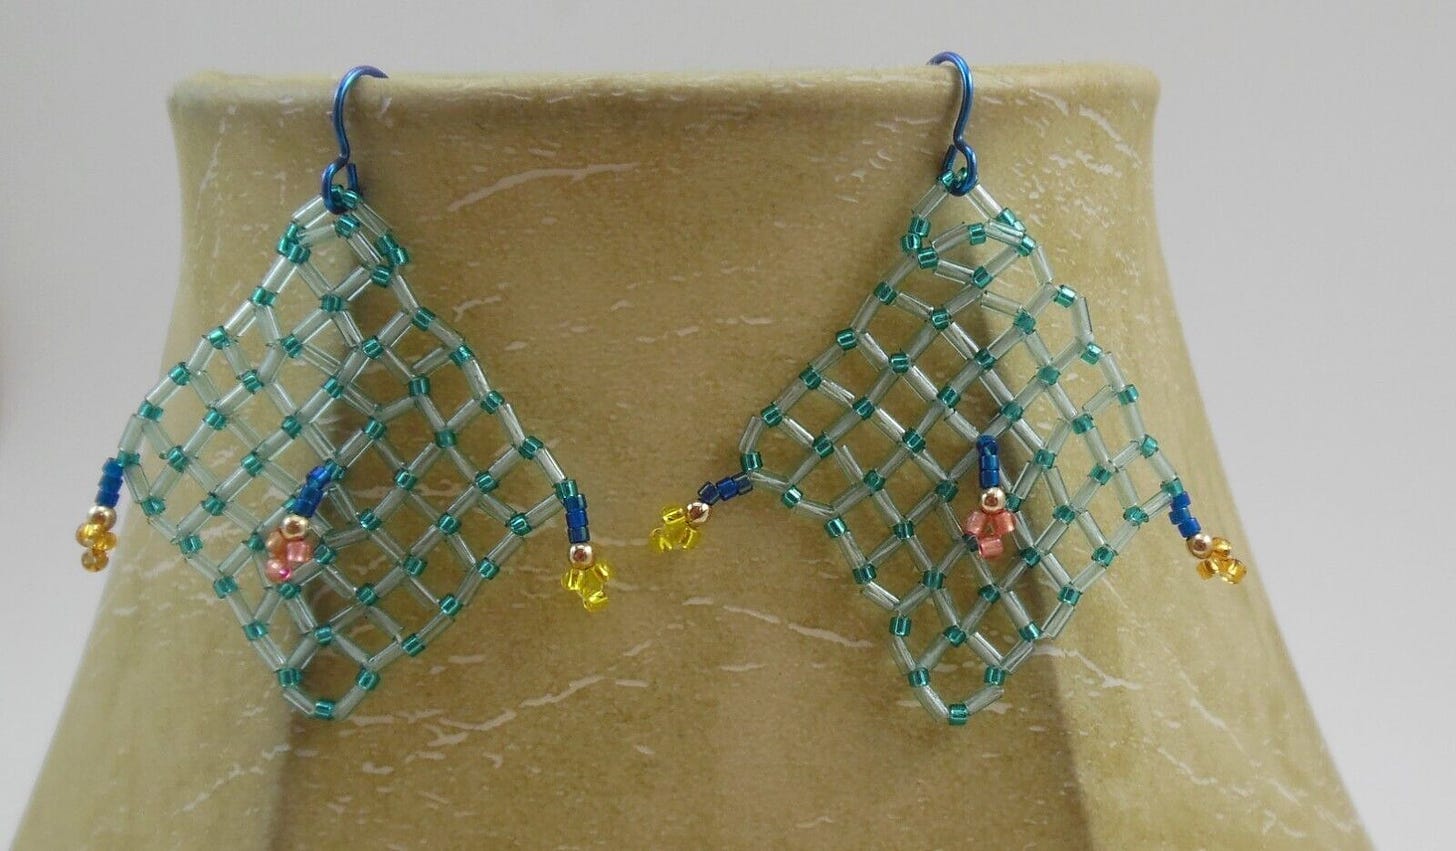 Mermaid Net beaded earrings, niobium earwires, handcrafted in USA - Picture 1 of 16